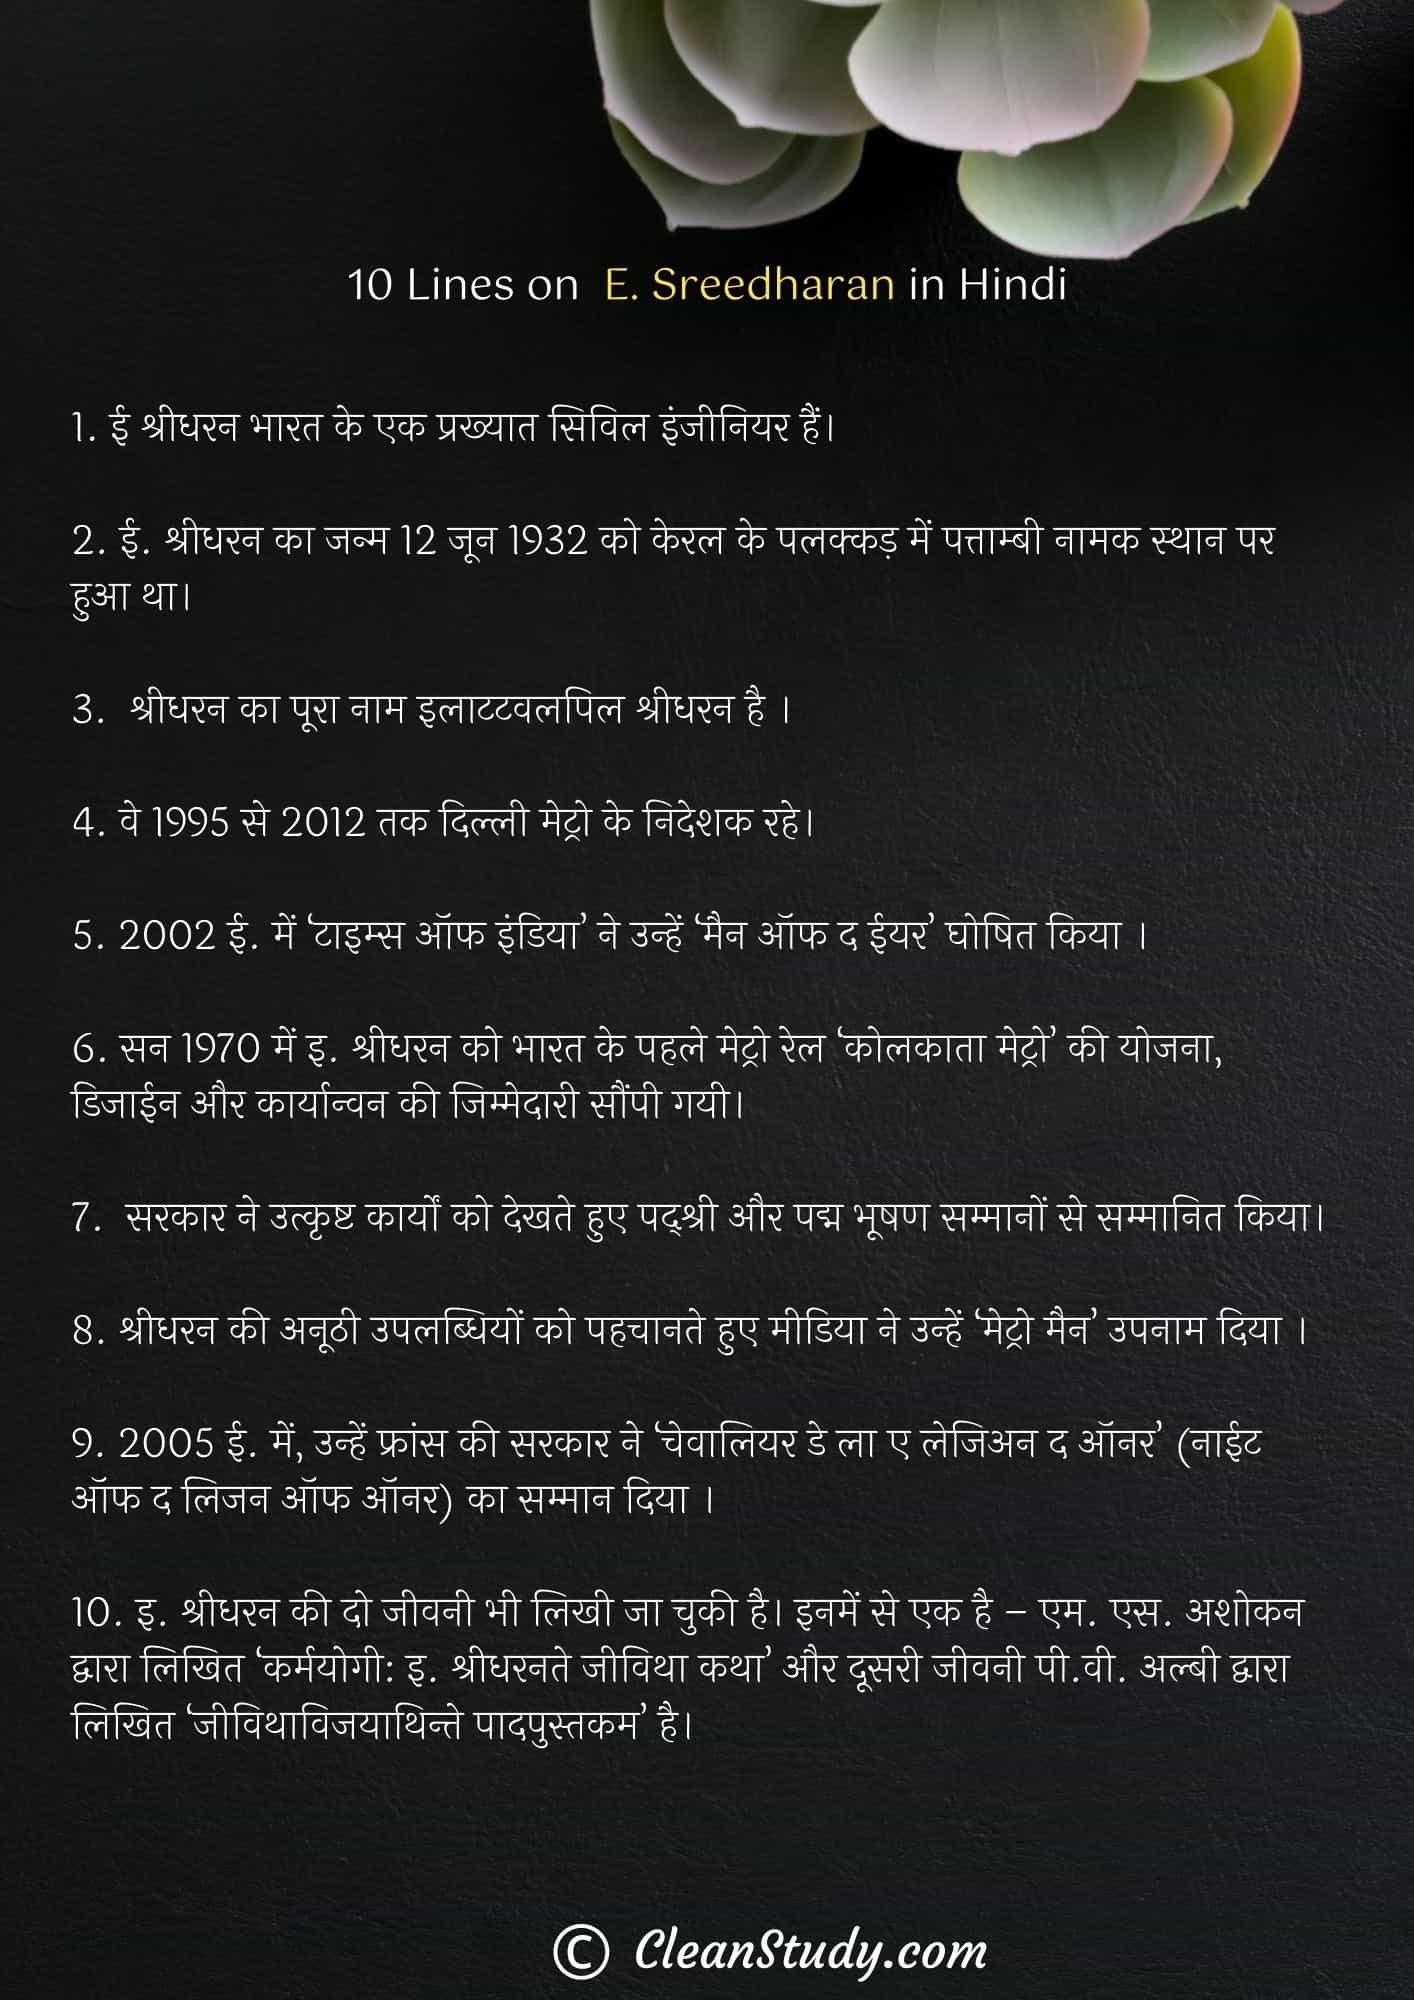 10 Lines on E. Sreedharan in Hindi